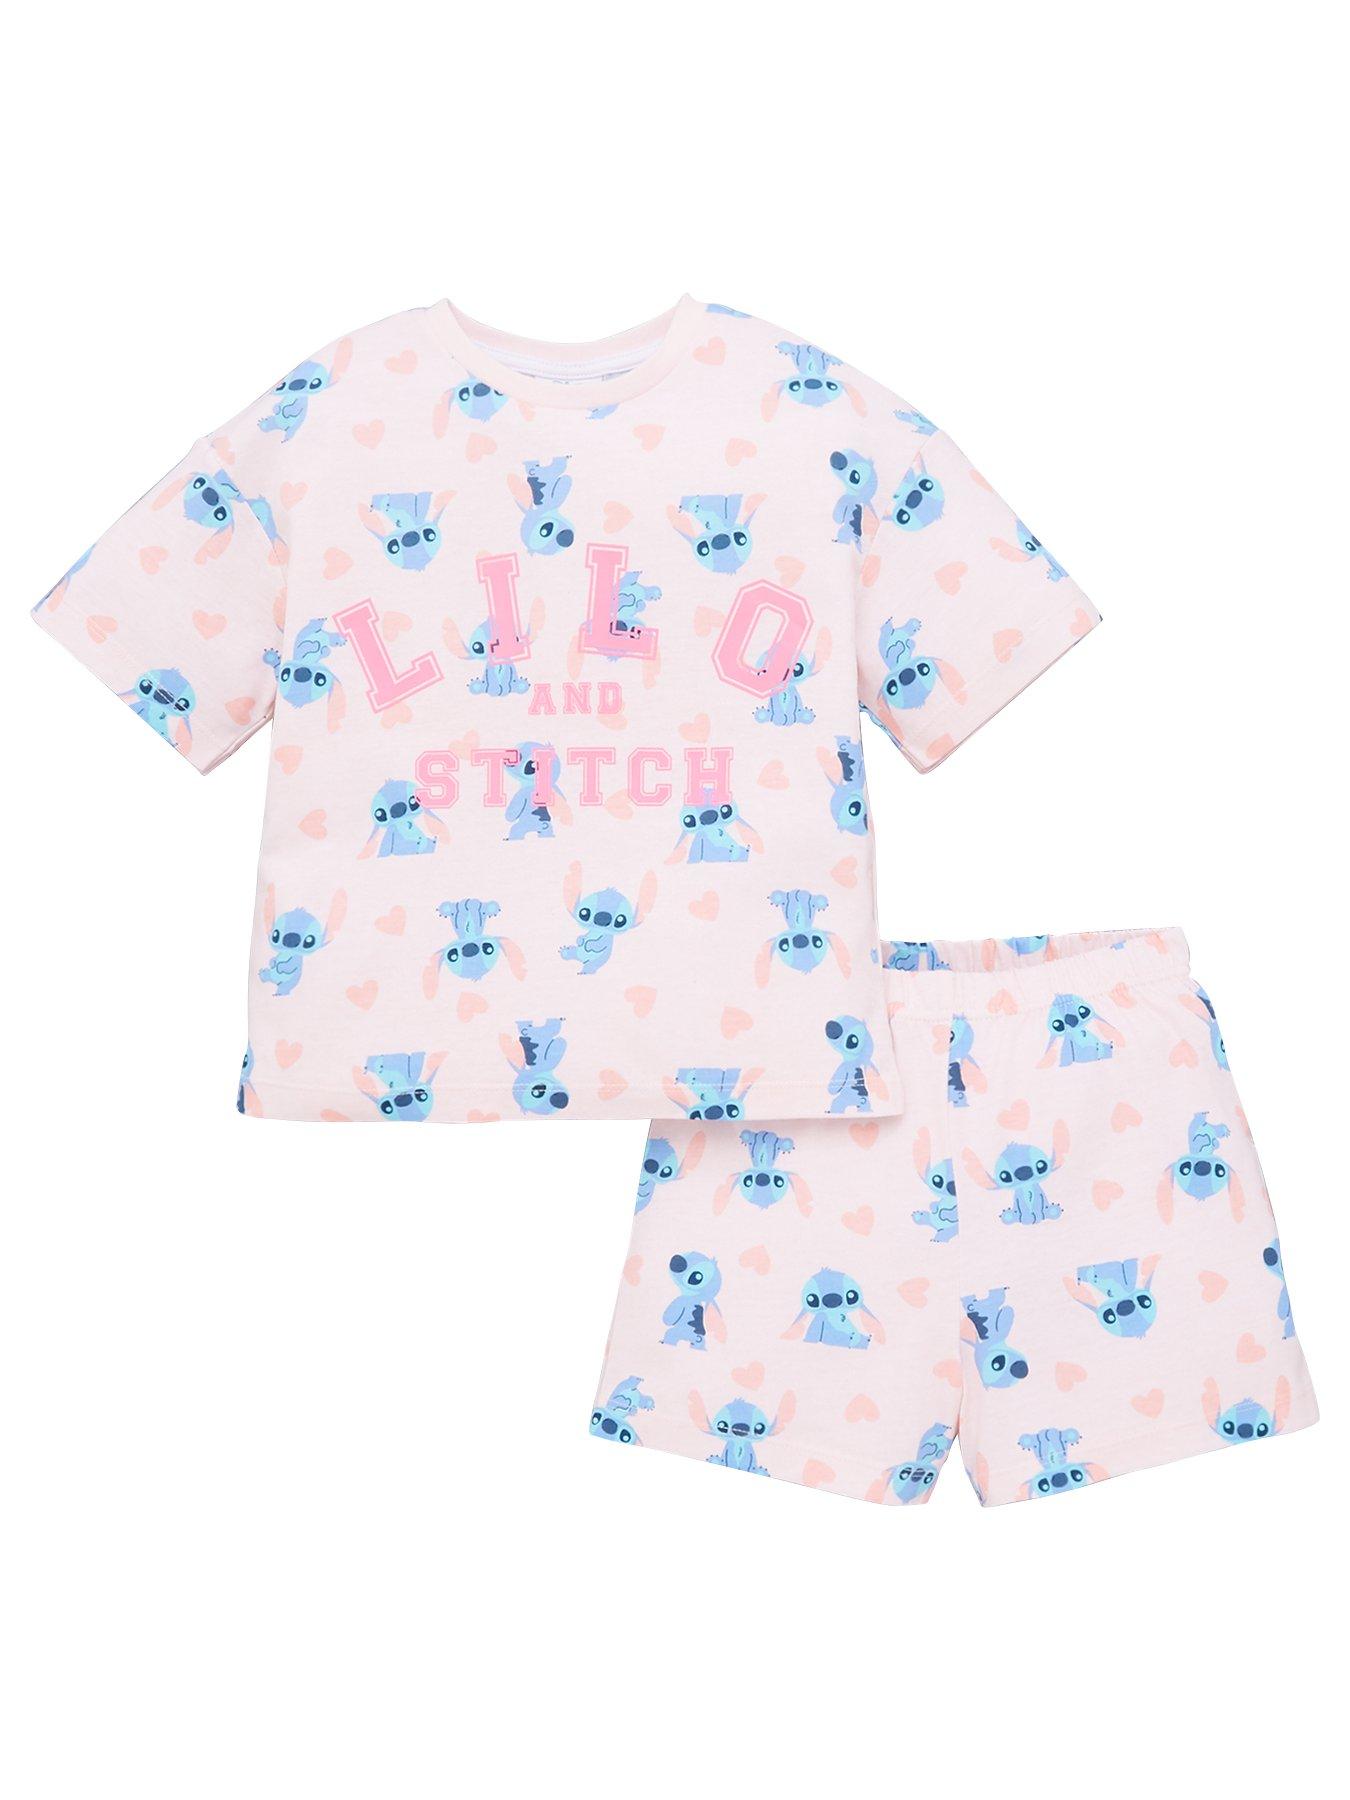 Boys Girls Baby Kids Shortie Short Pyjamas Pajamas T-Shirt Summer 1-10 Yrs 